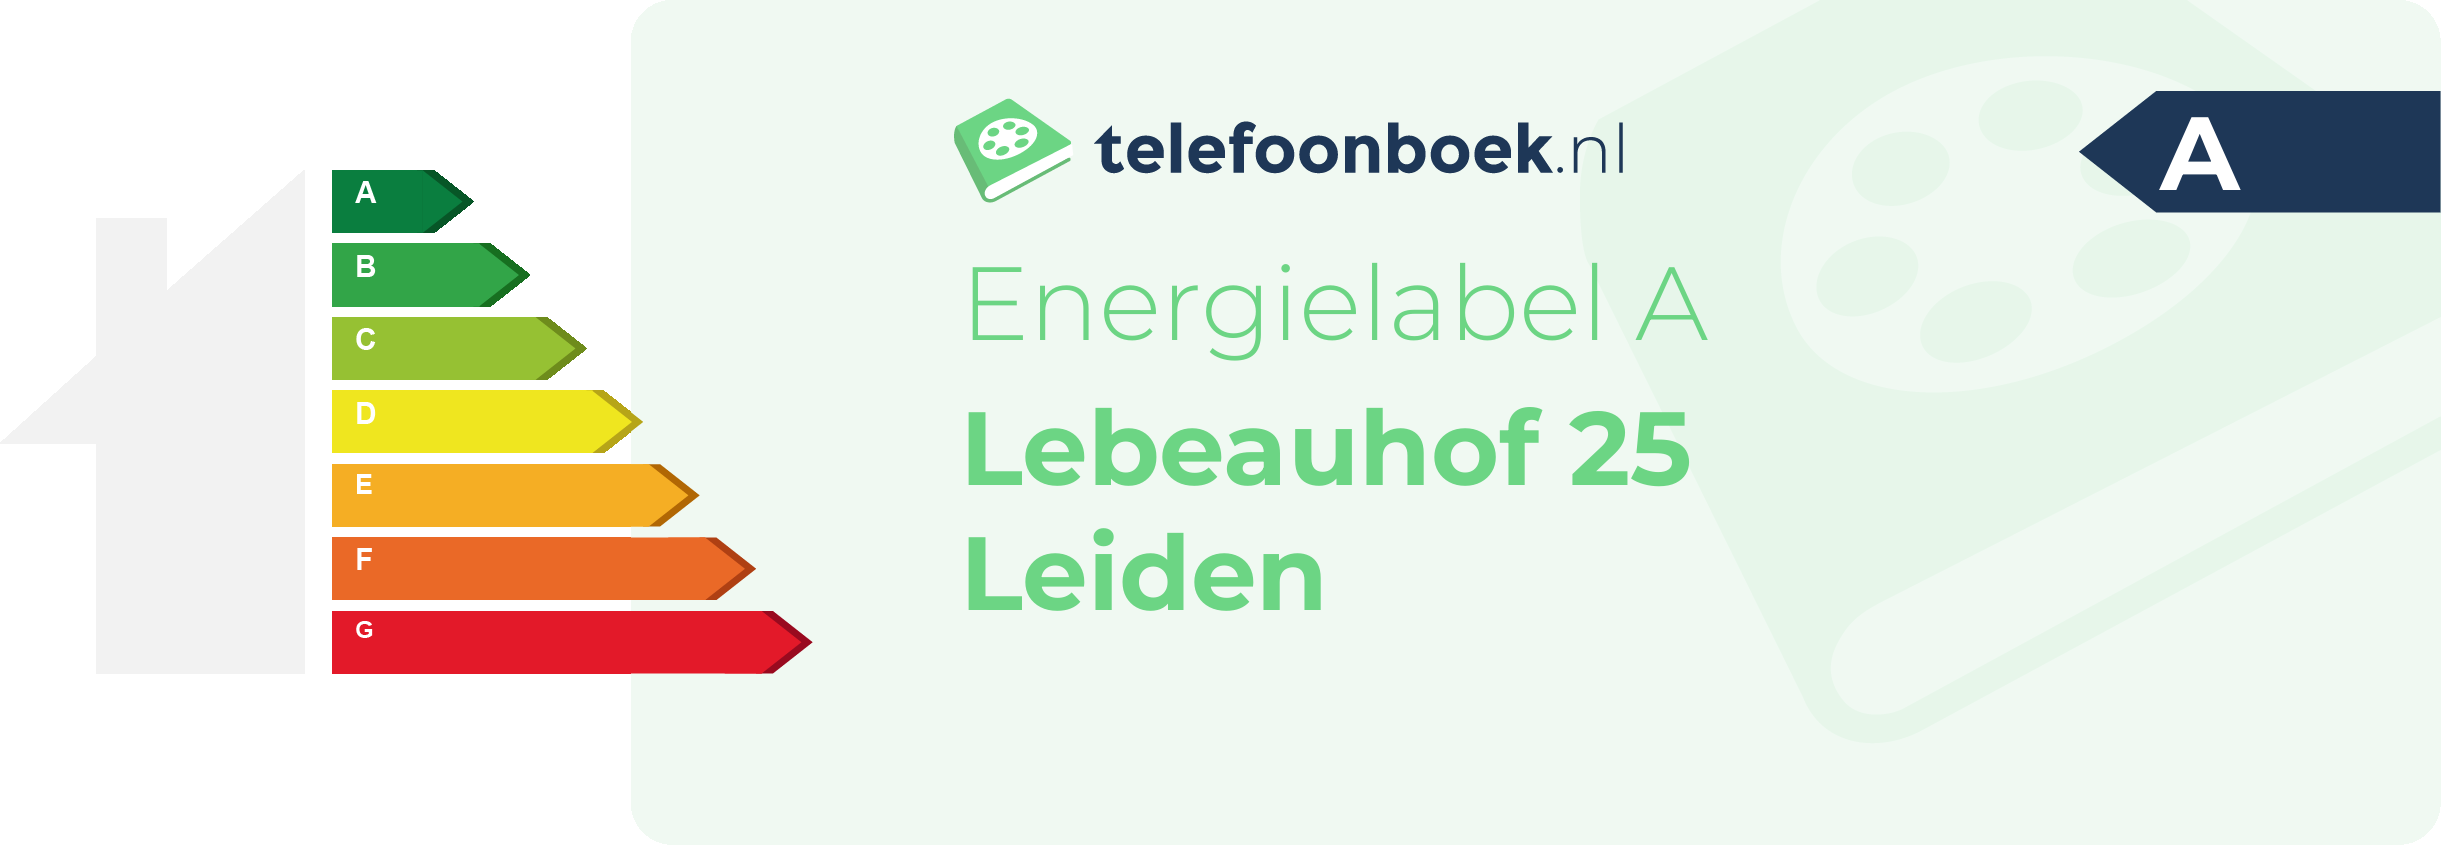 Energielabel Lebeauhof 25 Leiden